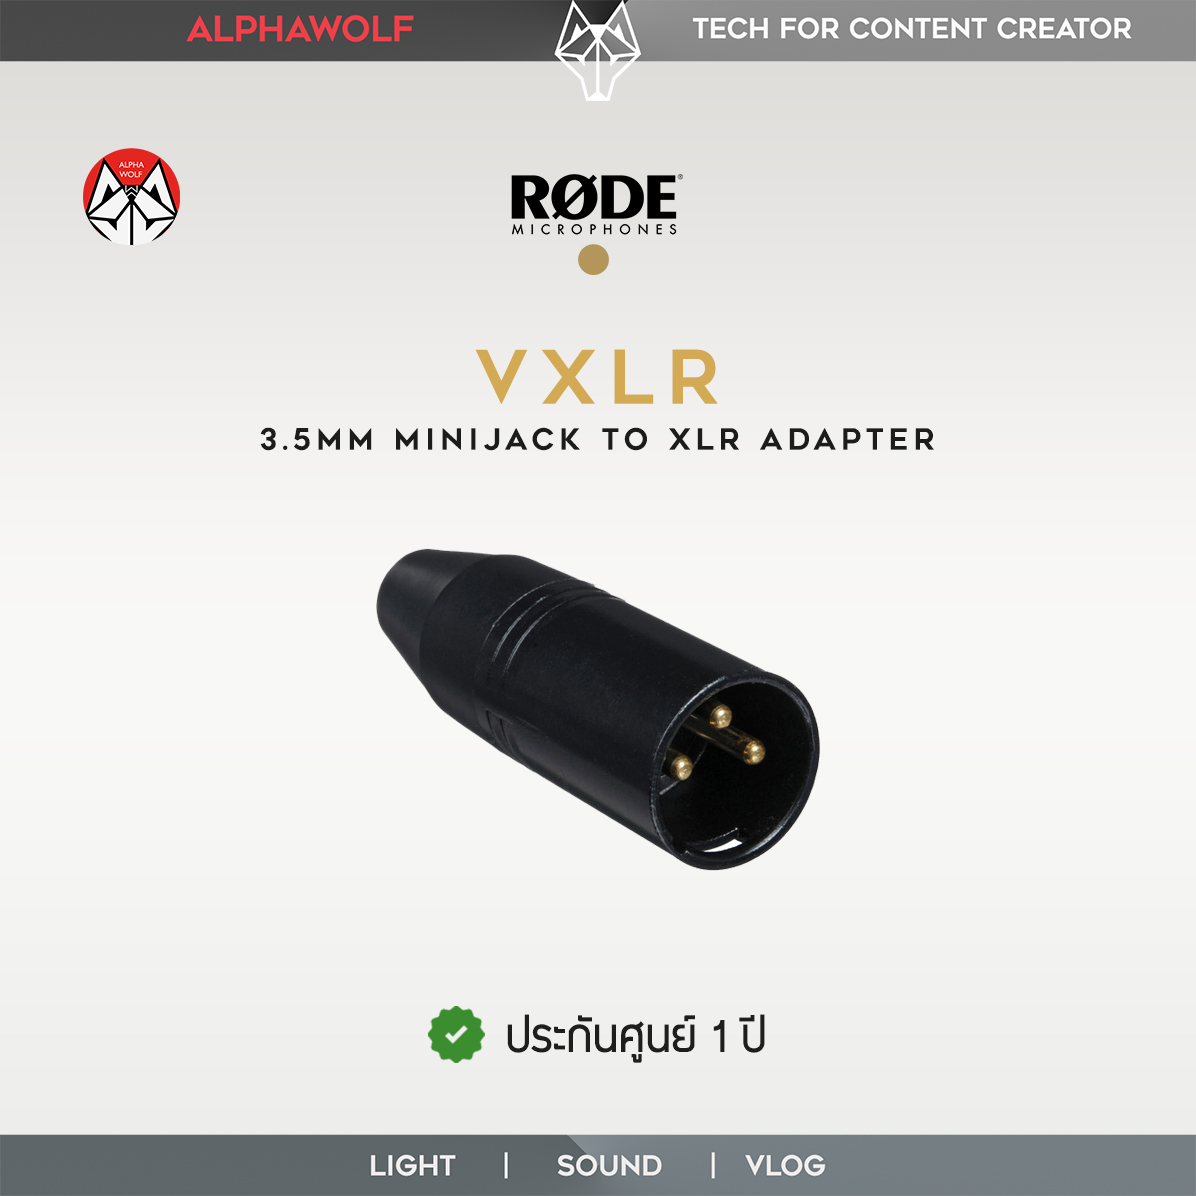 RODE VXLR 3.5mm TRS to XLR Adapter อแดปเตอร์แปลงสาย 3.5mm Minijack เป็นหัวแบบ XLR ประกันศูนย์ไทย 1 ปี  ALPHAWOLF